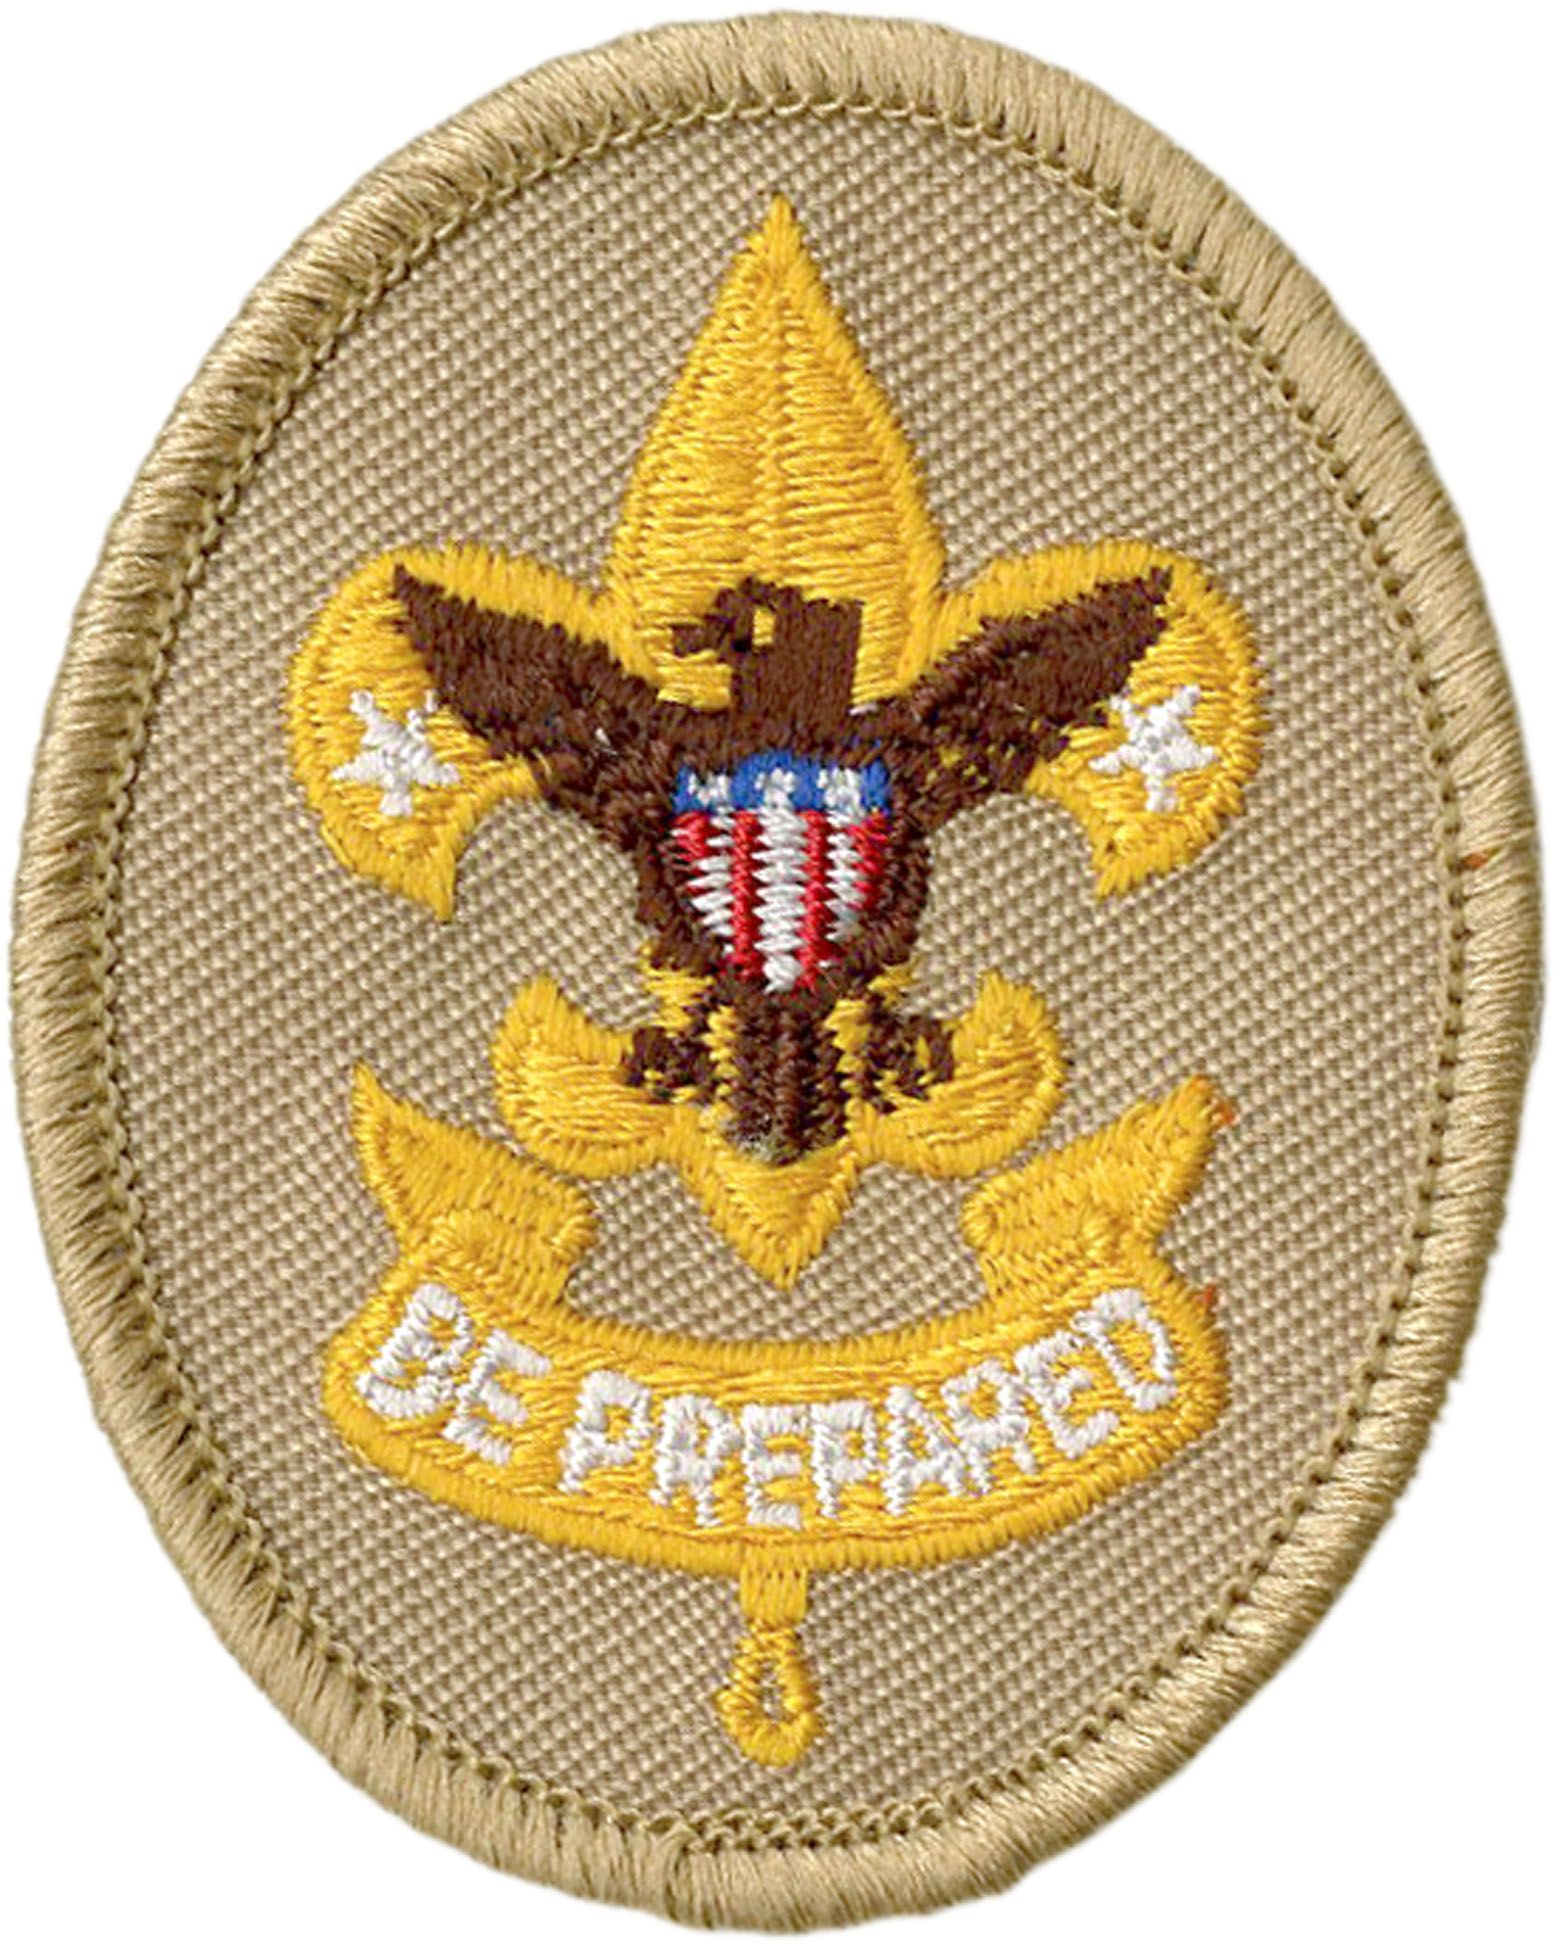 Scouting Programs - Boy Scouts of America Coastal Georgia Council